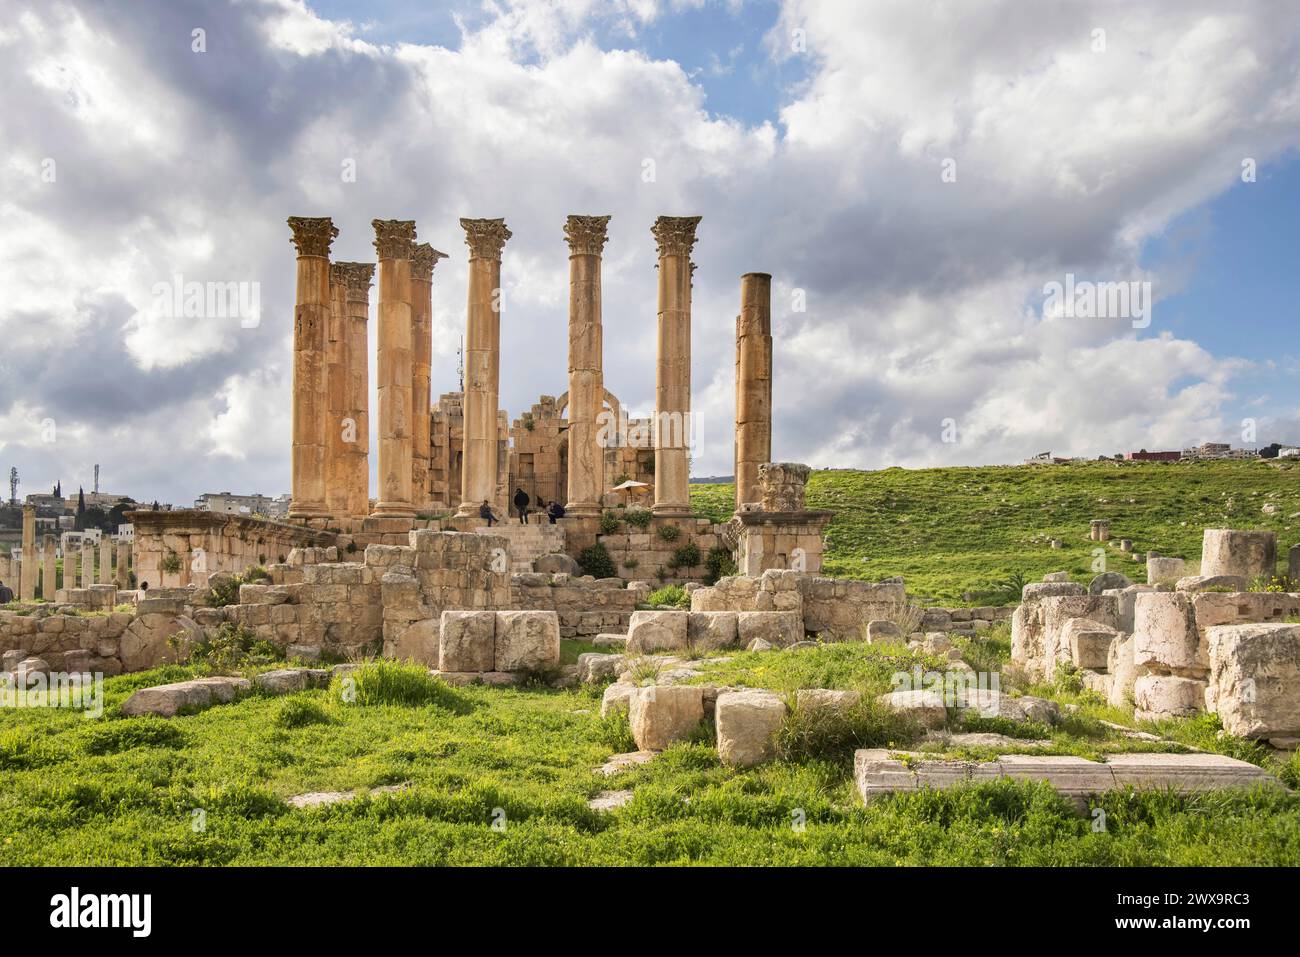 columns at the temple of artemis in the greco roman ruins of jerash in jordan Stock Photo